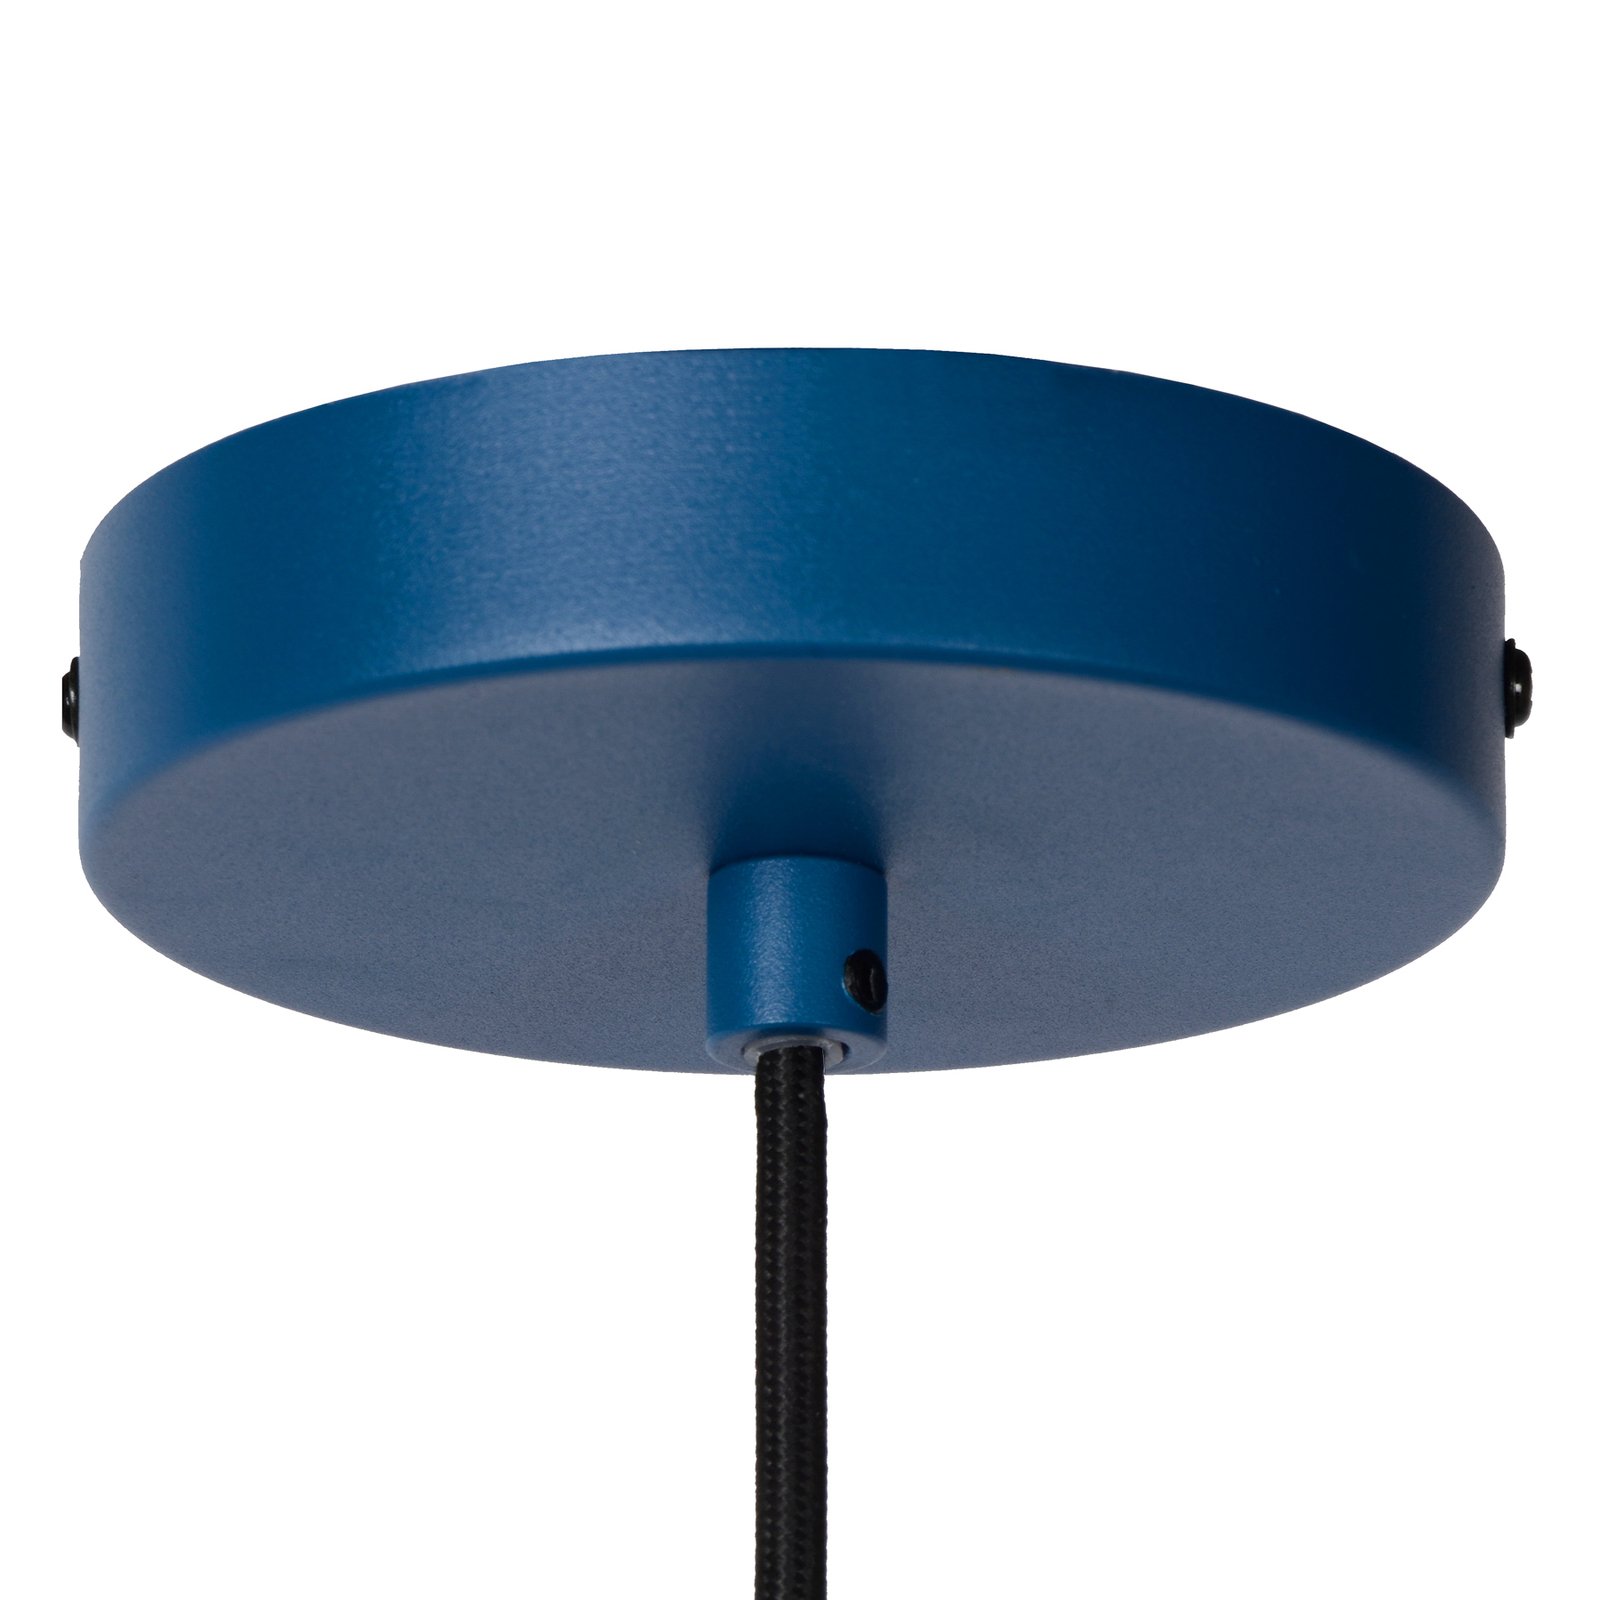 Siemon pendant light made of steel, Ø 40 cm, blue